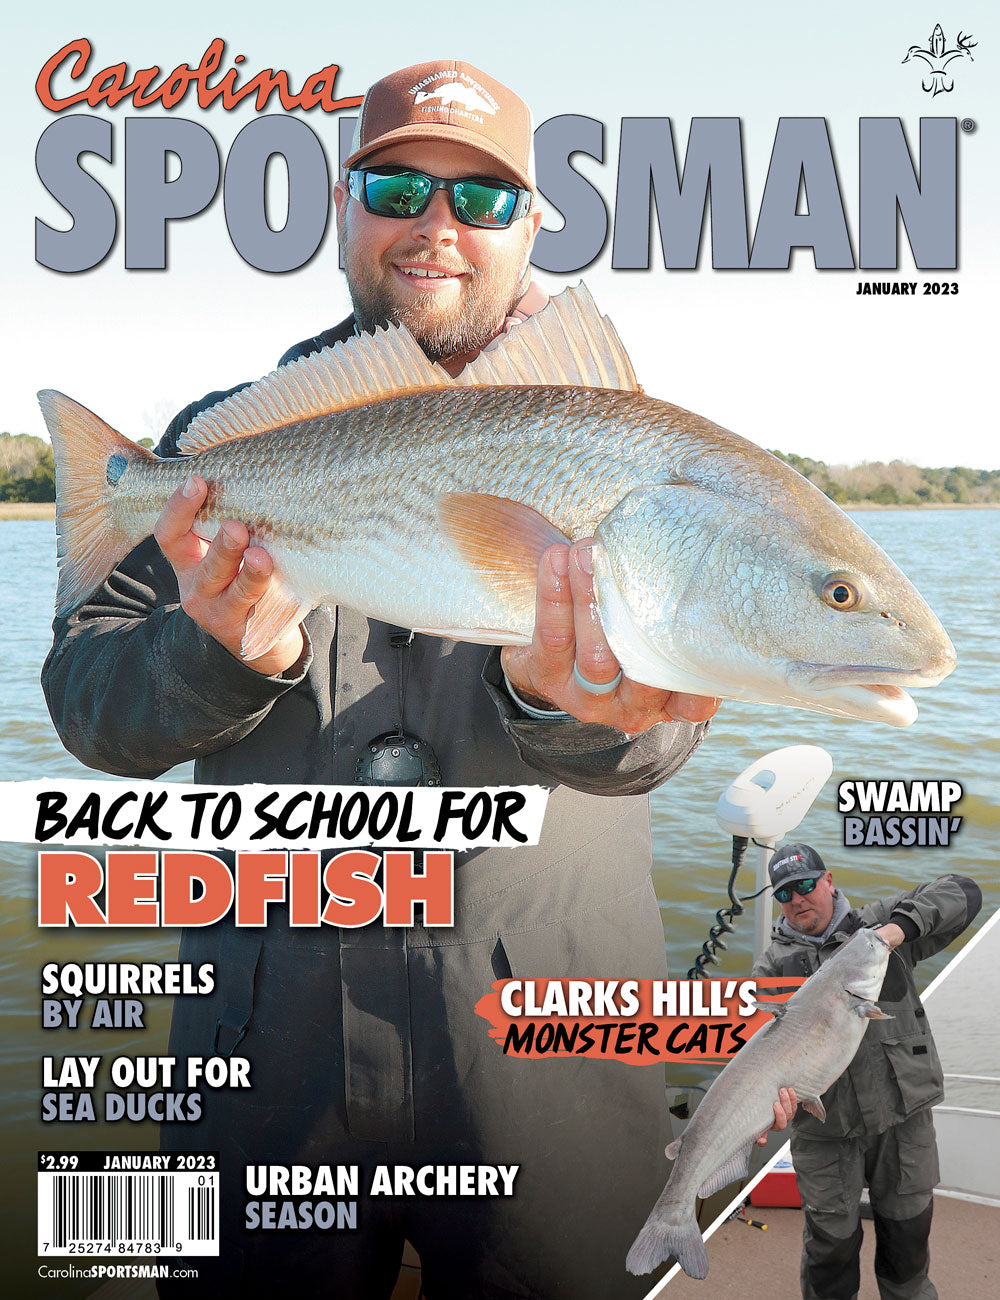 Bassin Magazine Subscription 